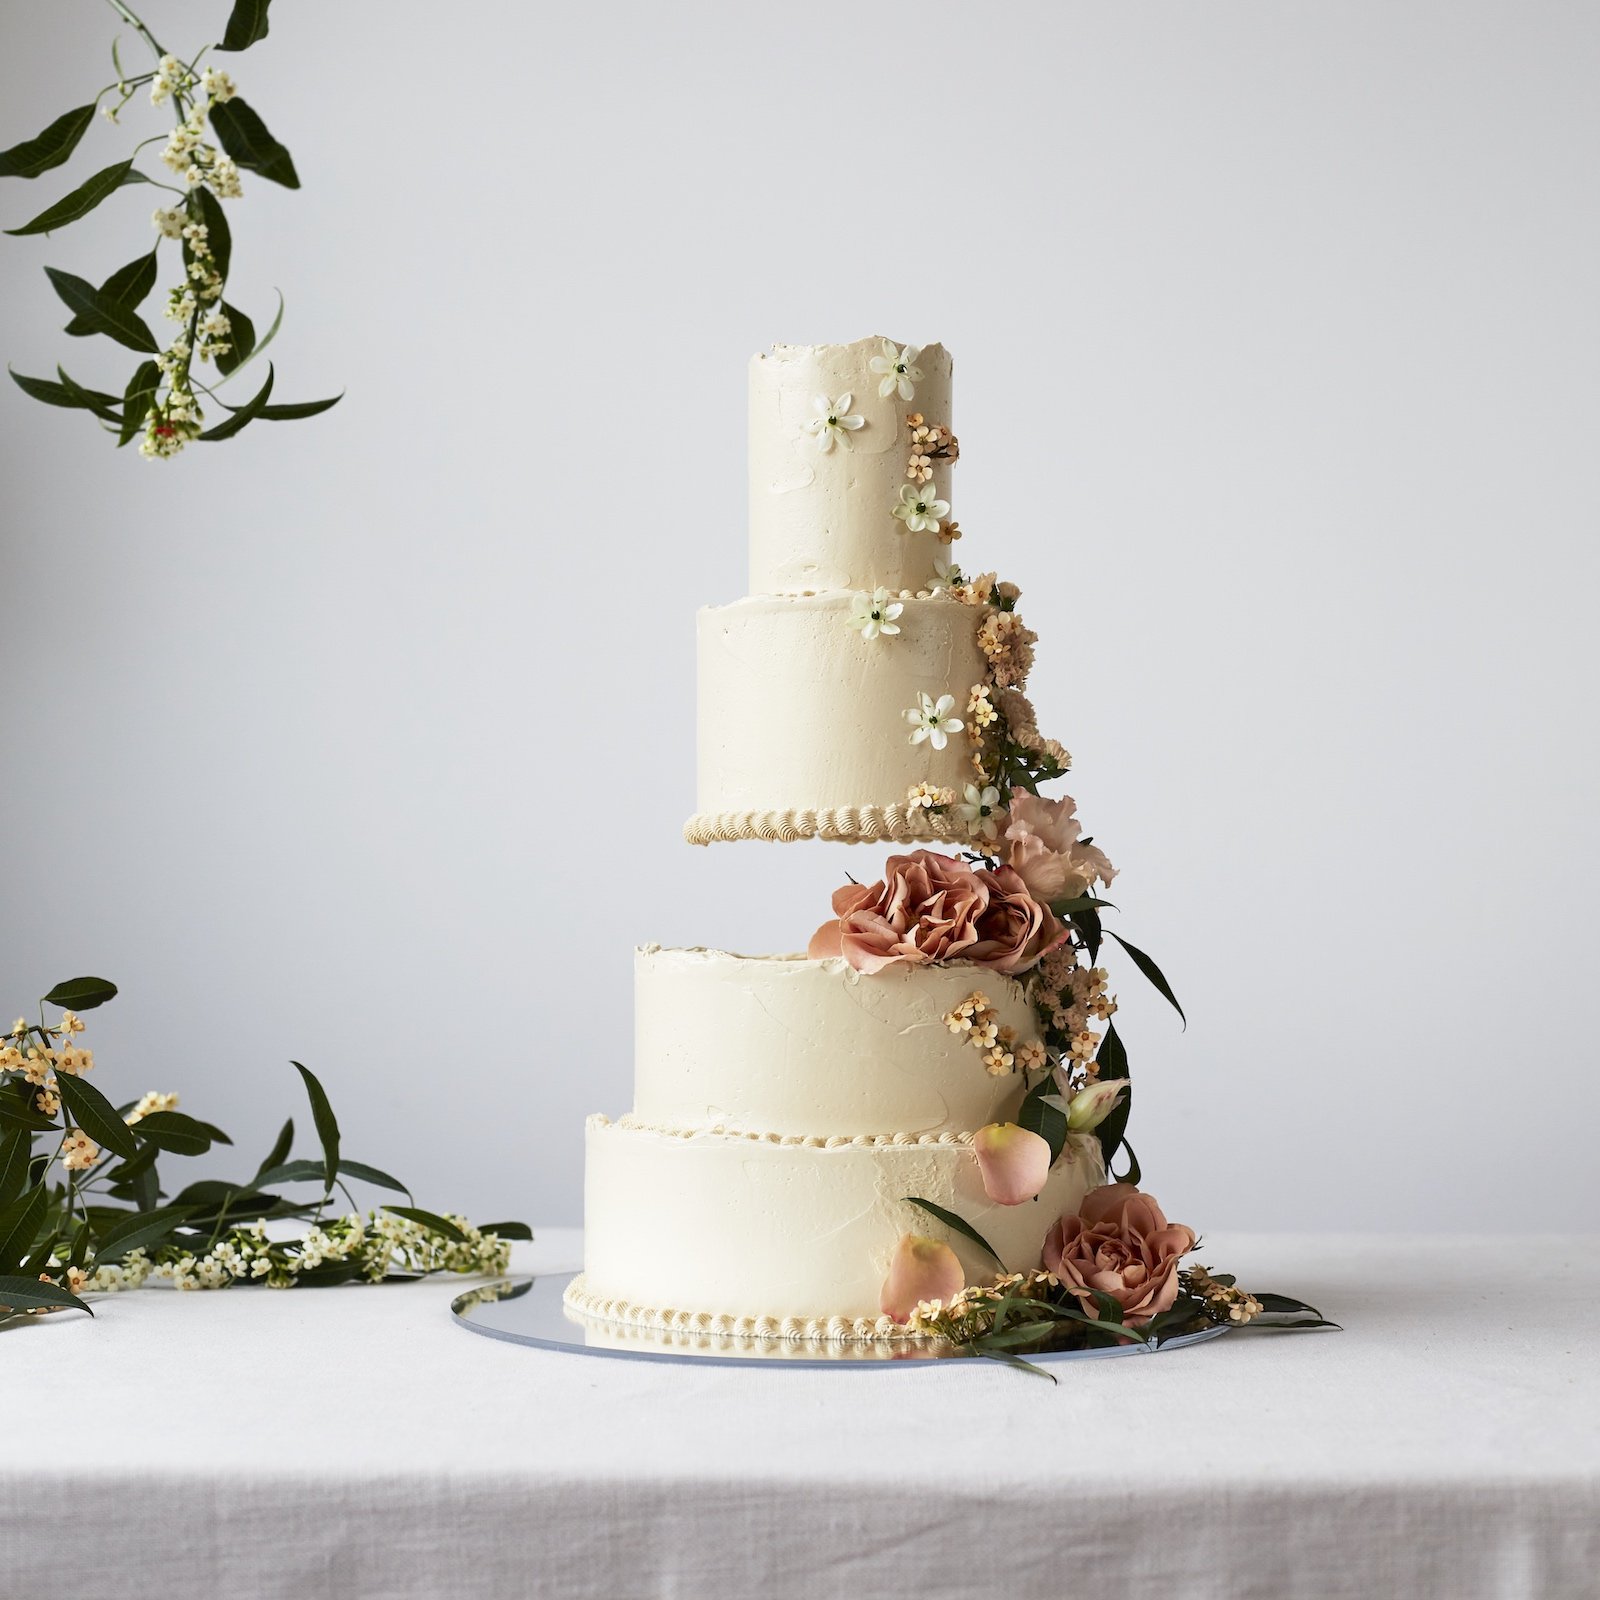 Süss Cake Studio 16.11.21_Suss_Wedding_Cake_Flowers_293 JPEG 1600x1600.jpg